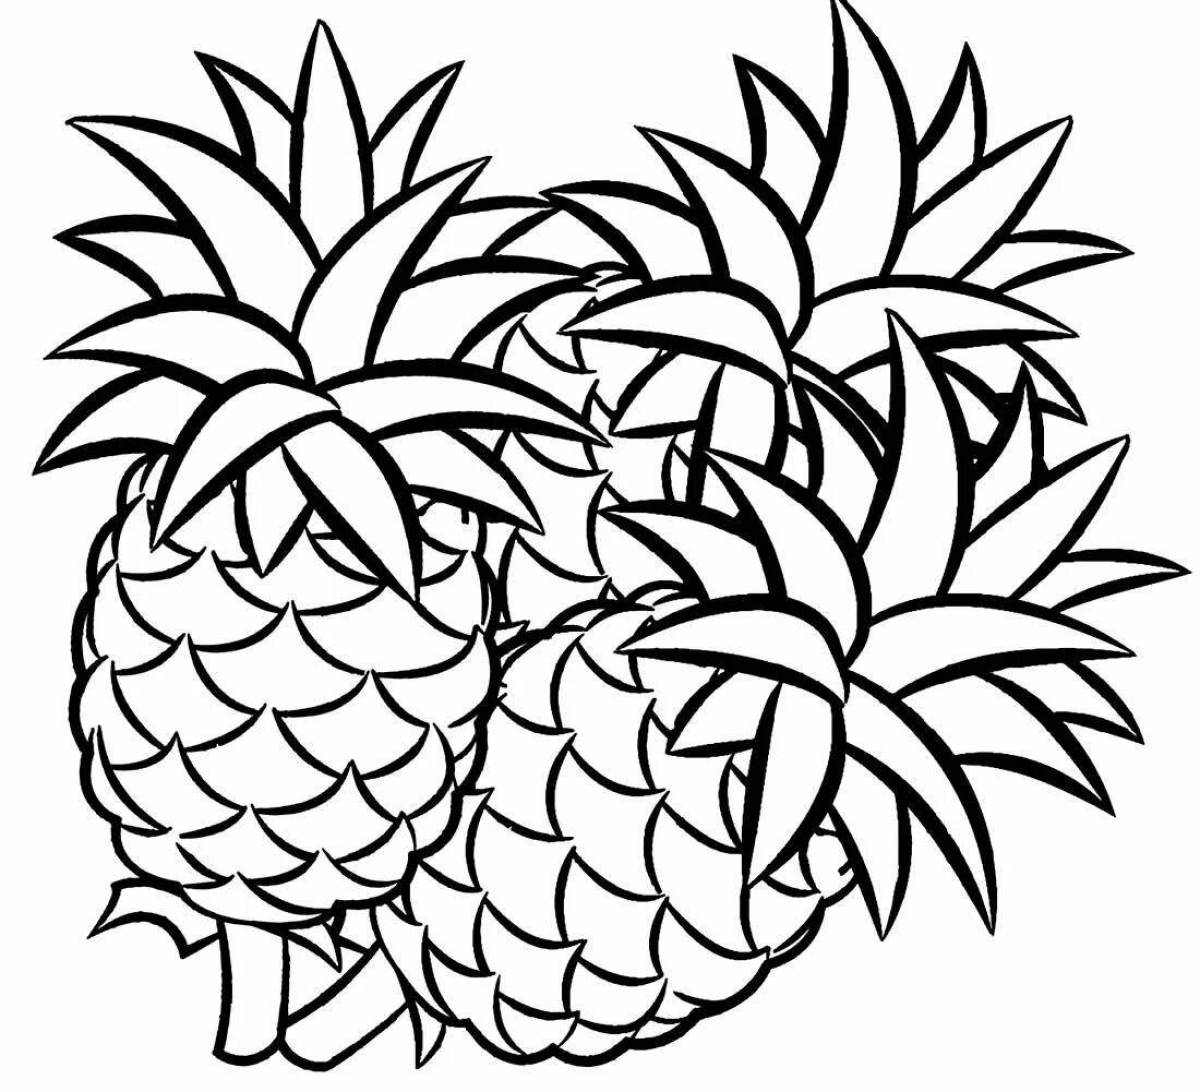 Joyful pineapple coloring book for kids